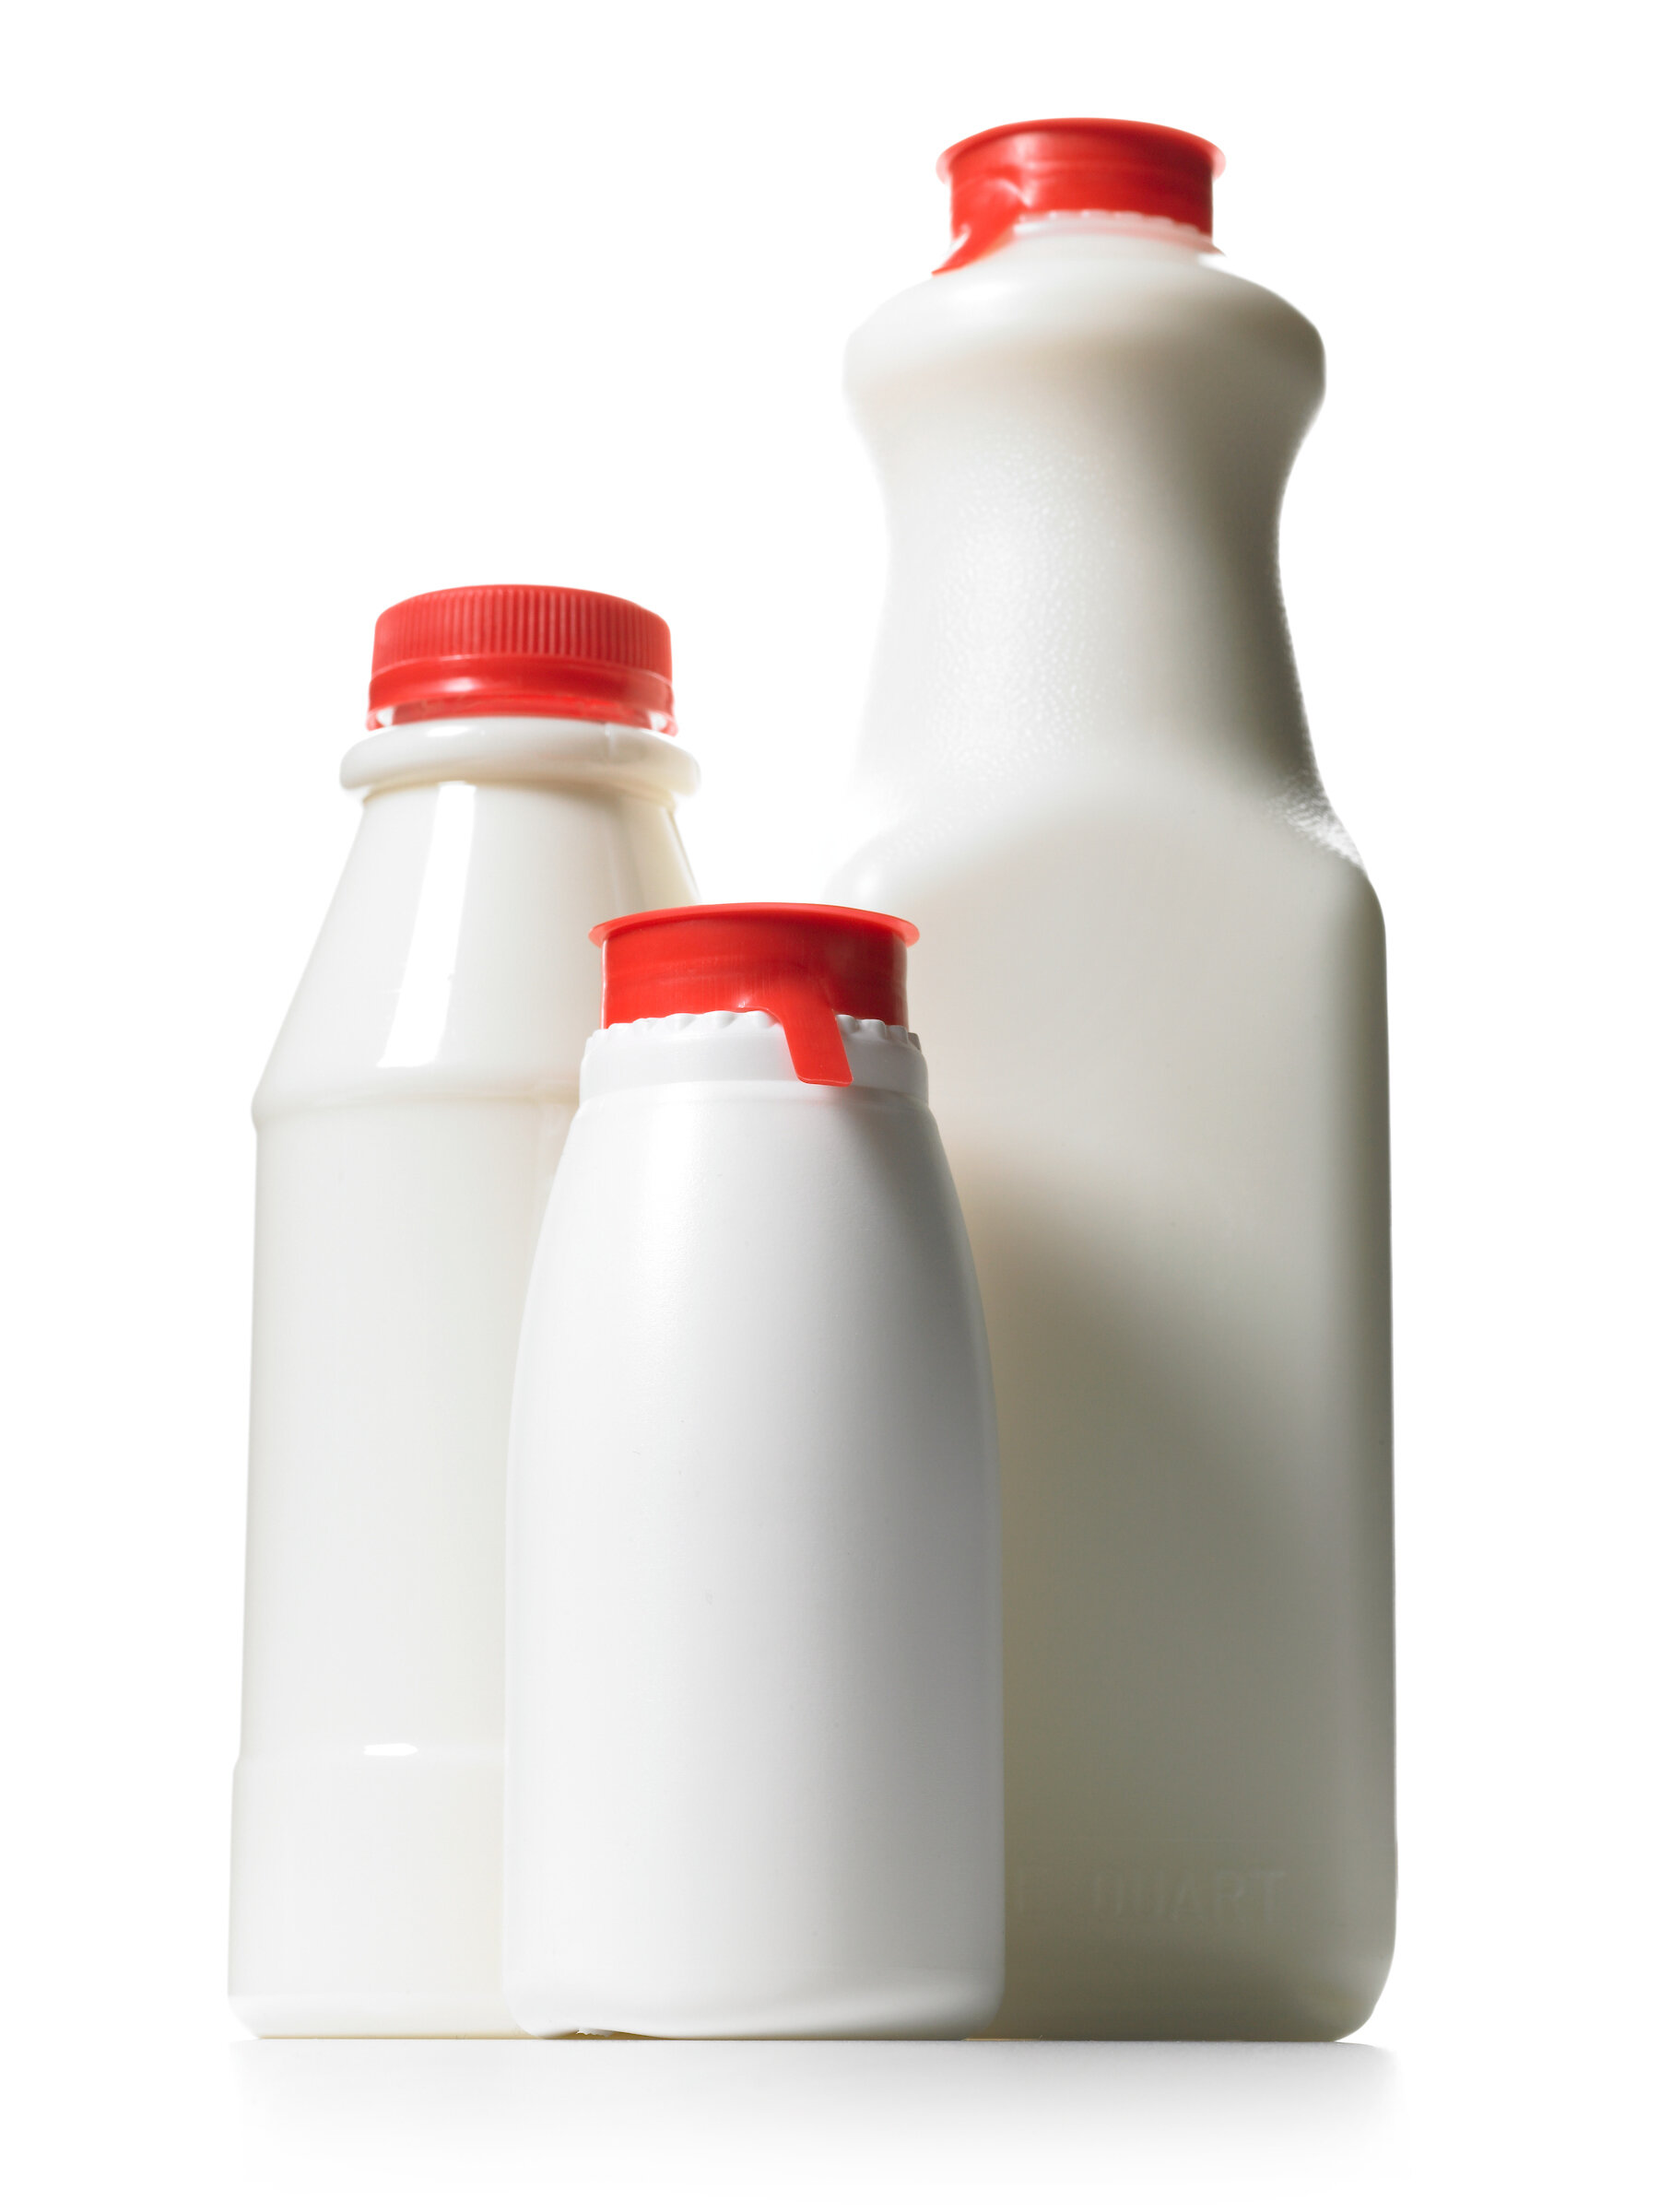 Milk in plastic bottles with red caps.jpg